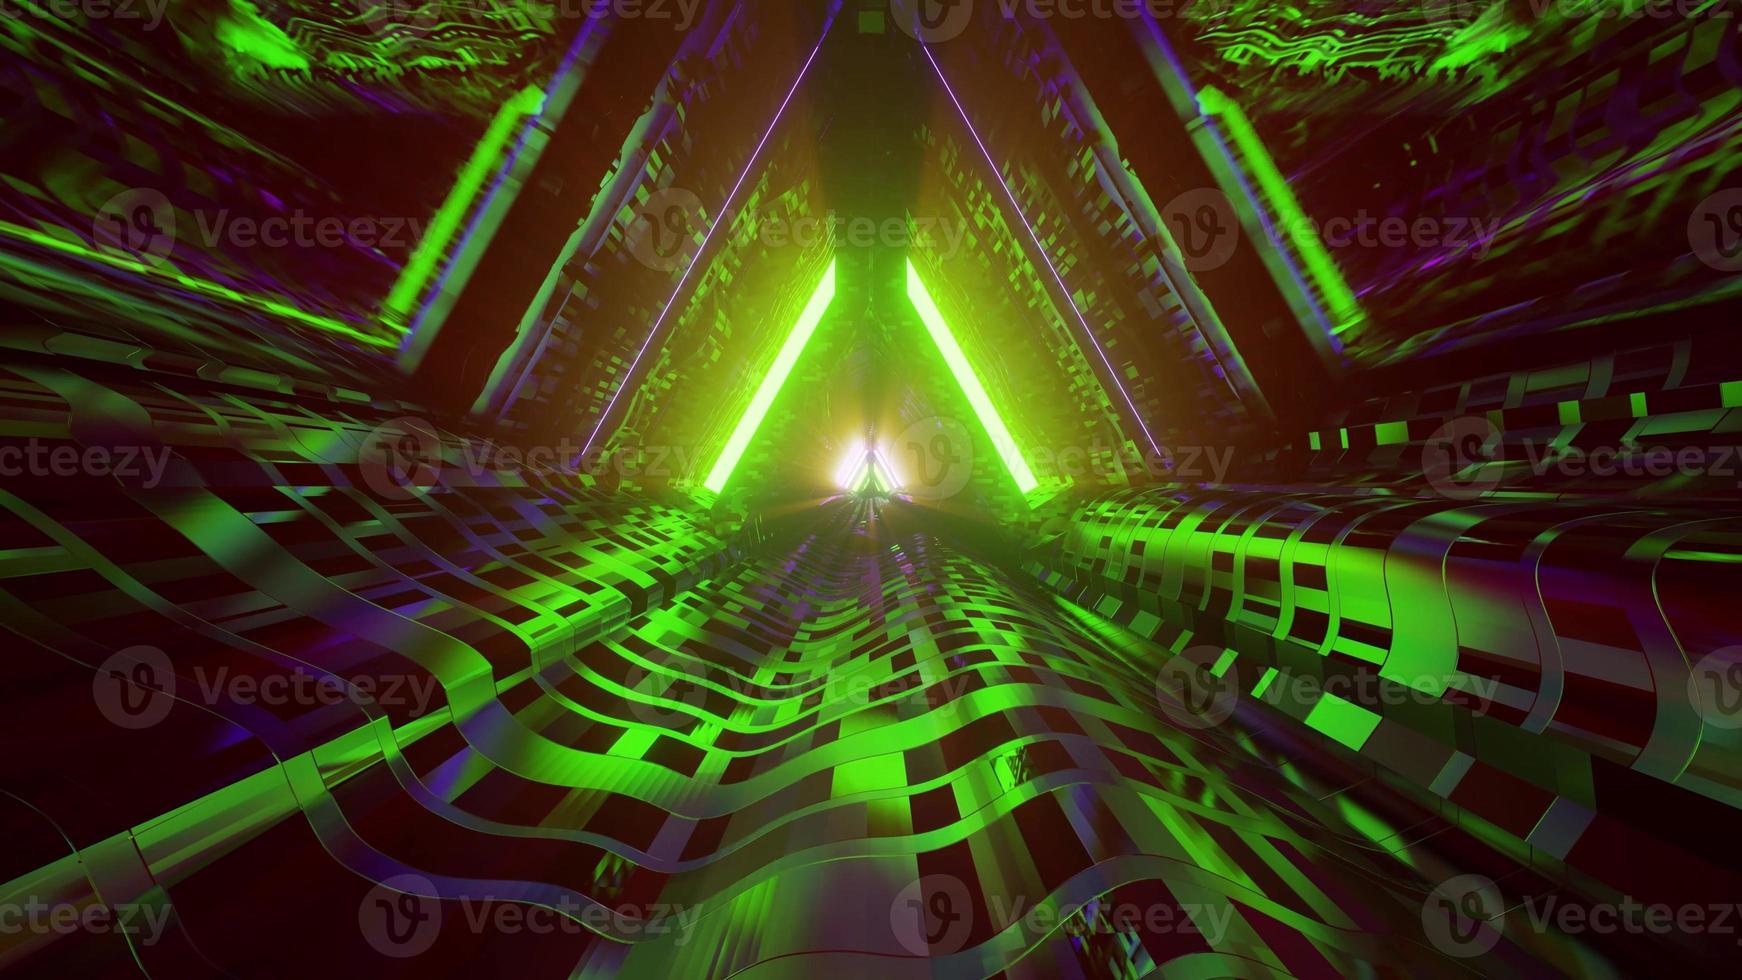 túnel geométrico sci fi com ilustração em neon 4k uhd 3d foto